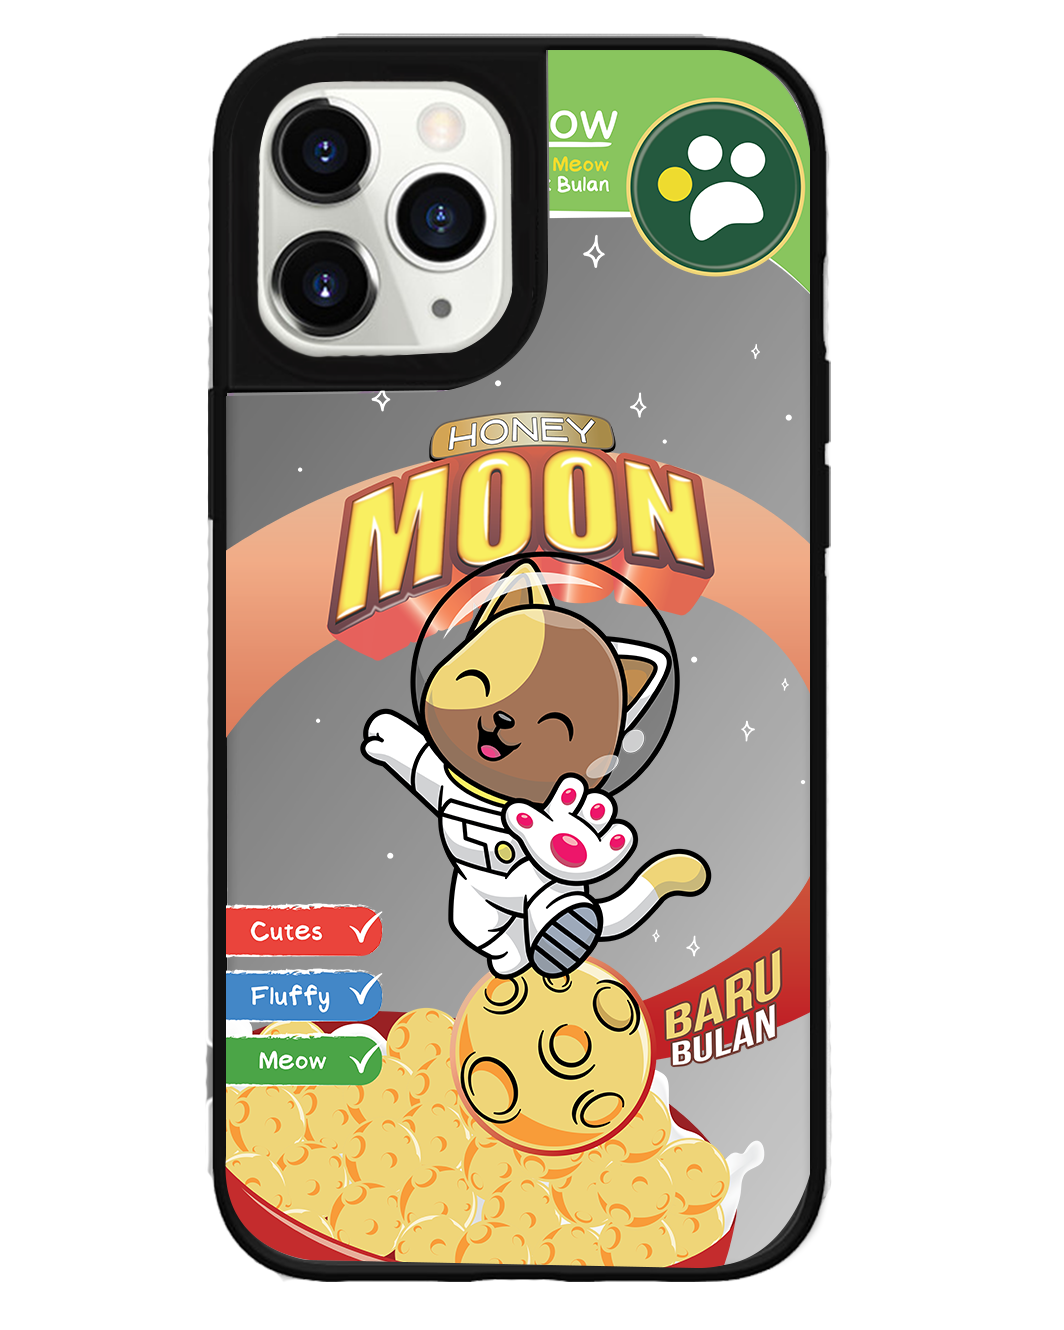 iPhone Mirror Grip Case - Honey Moon